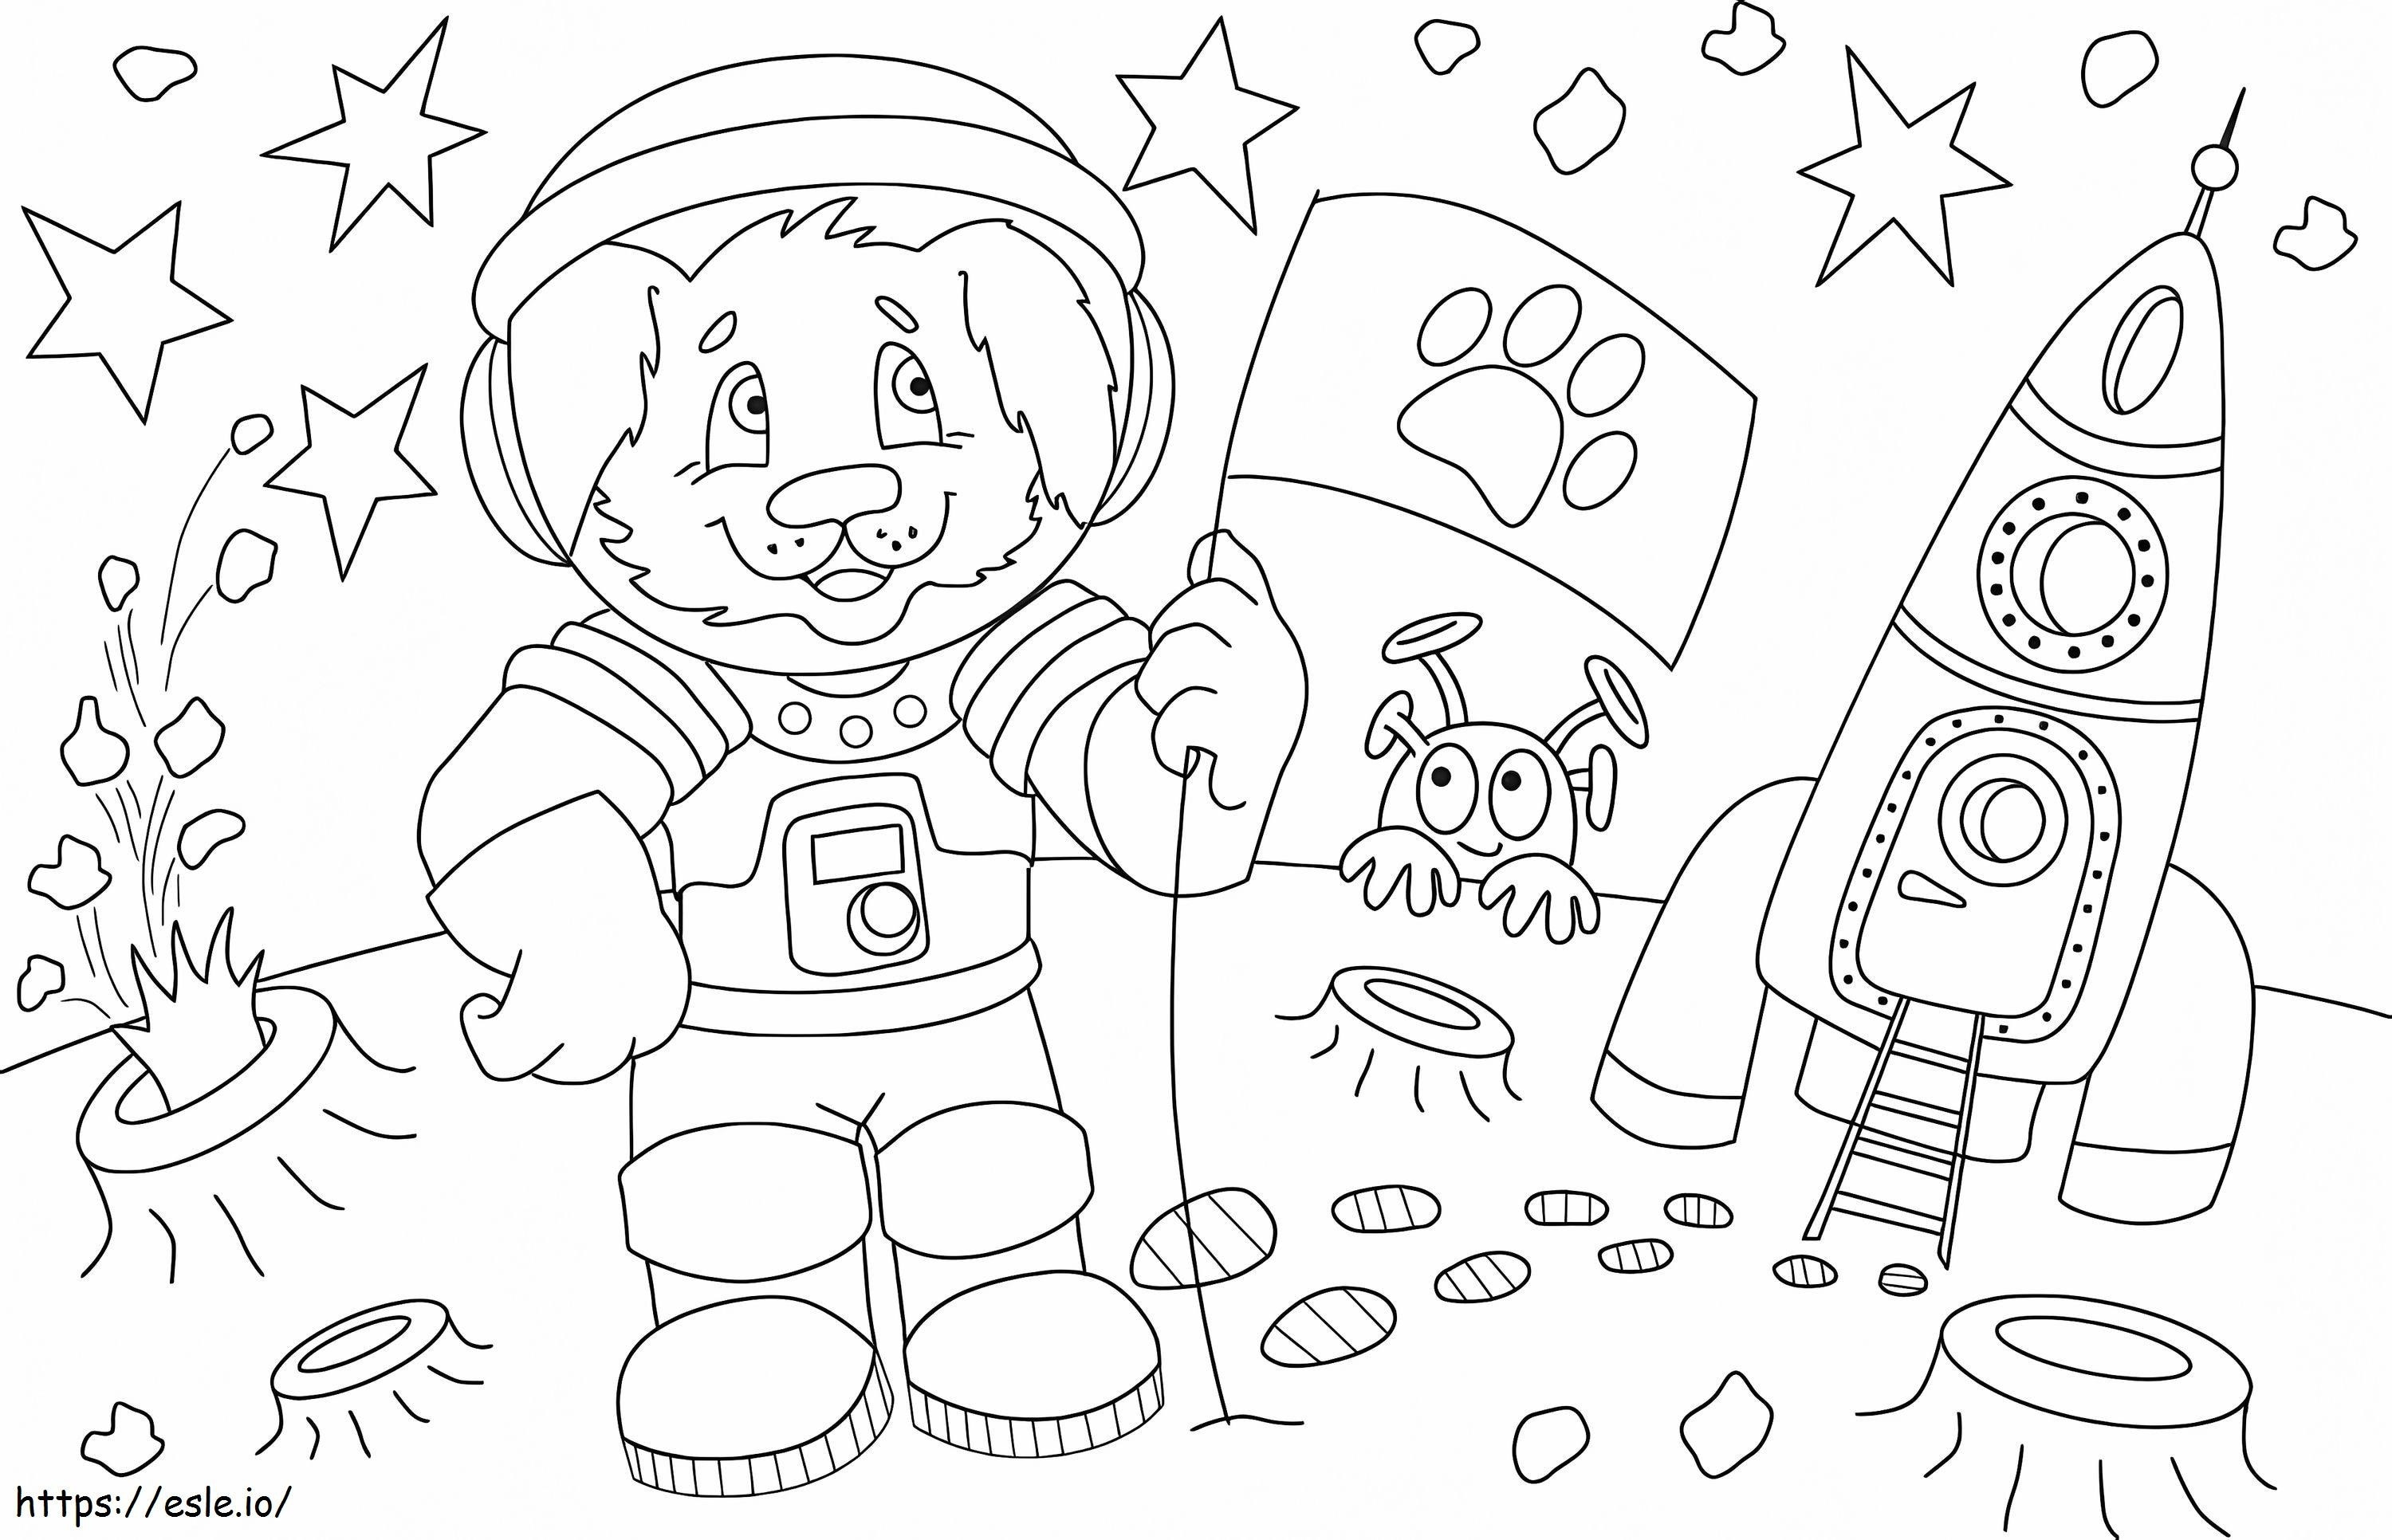 Astronauta animal de desenho animado para colorir